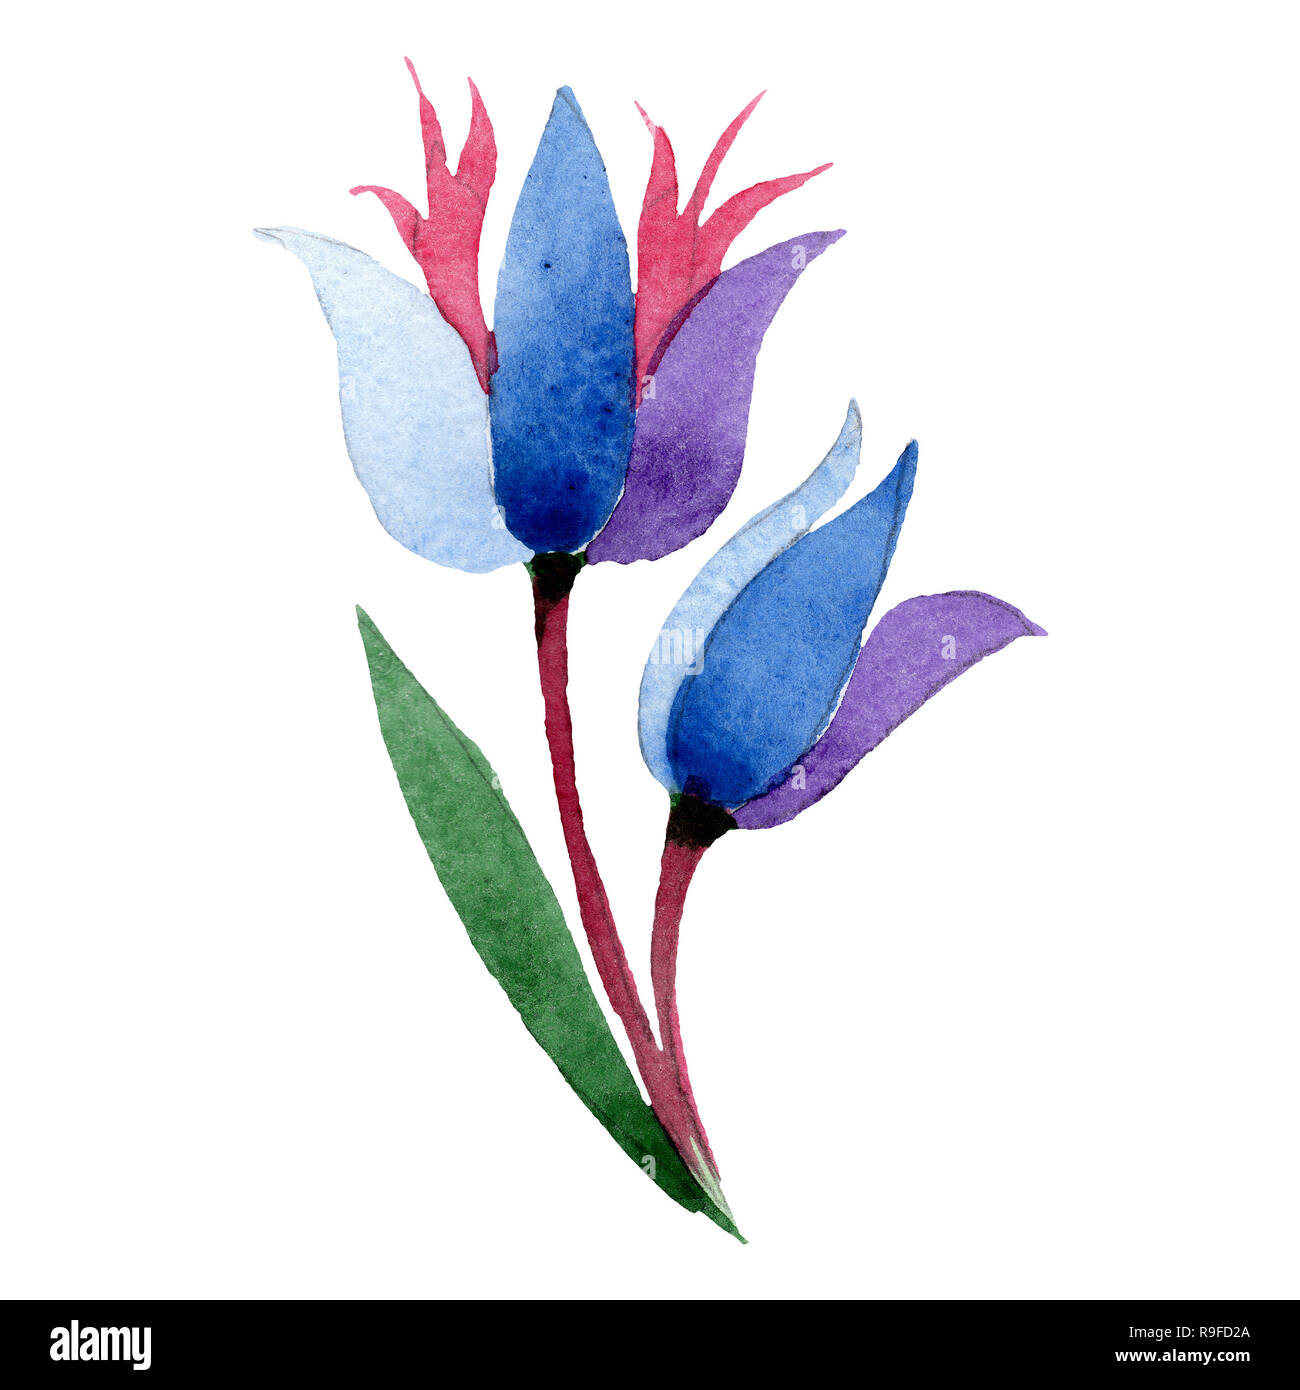 Blue flowers : r/Watercolor